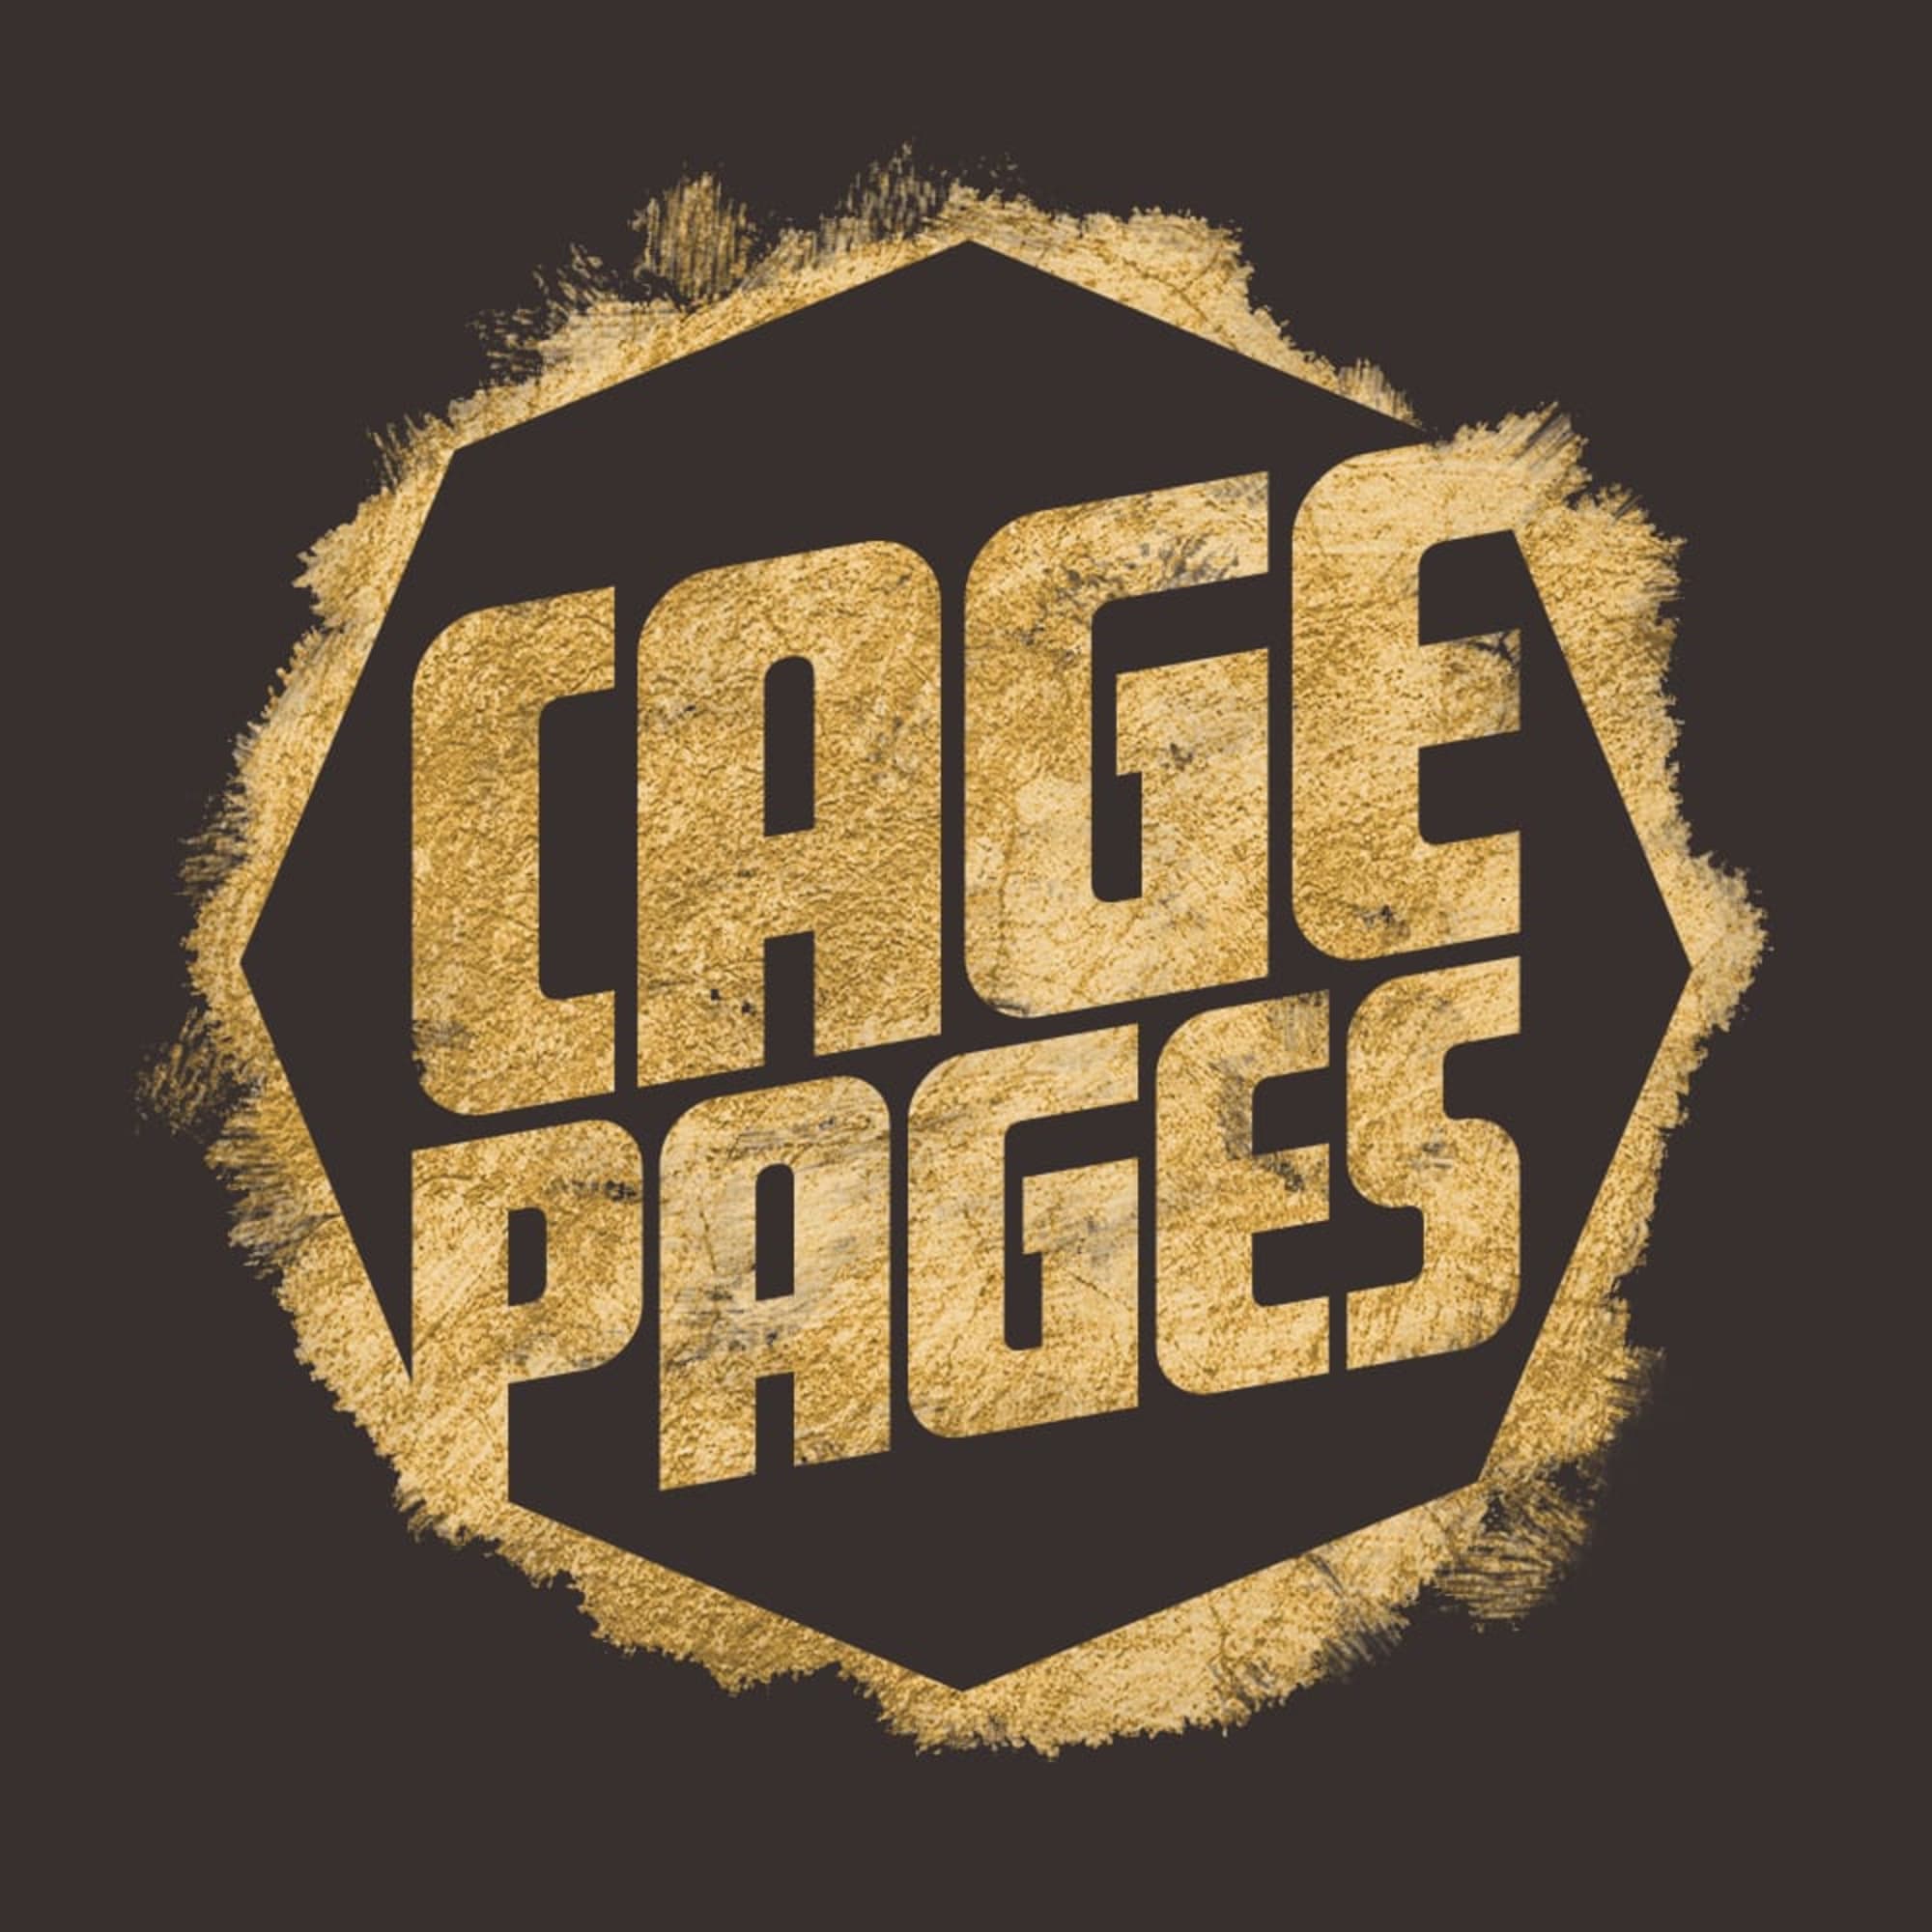 (c) Cagepages.com